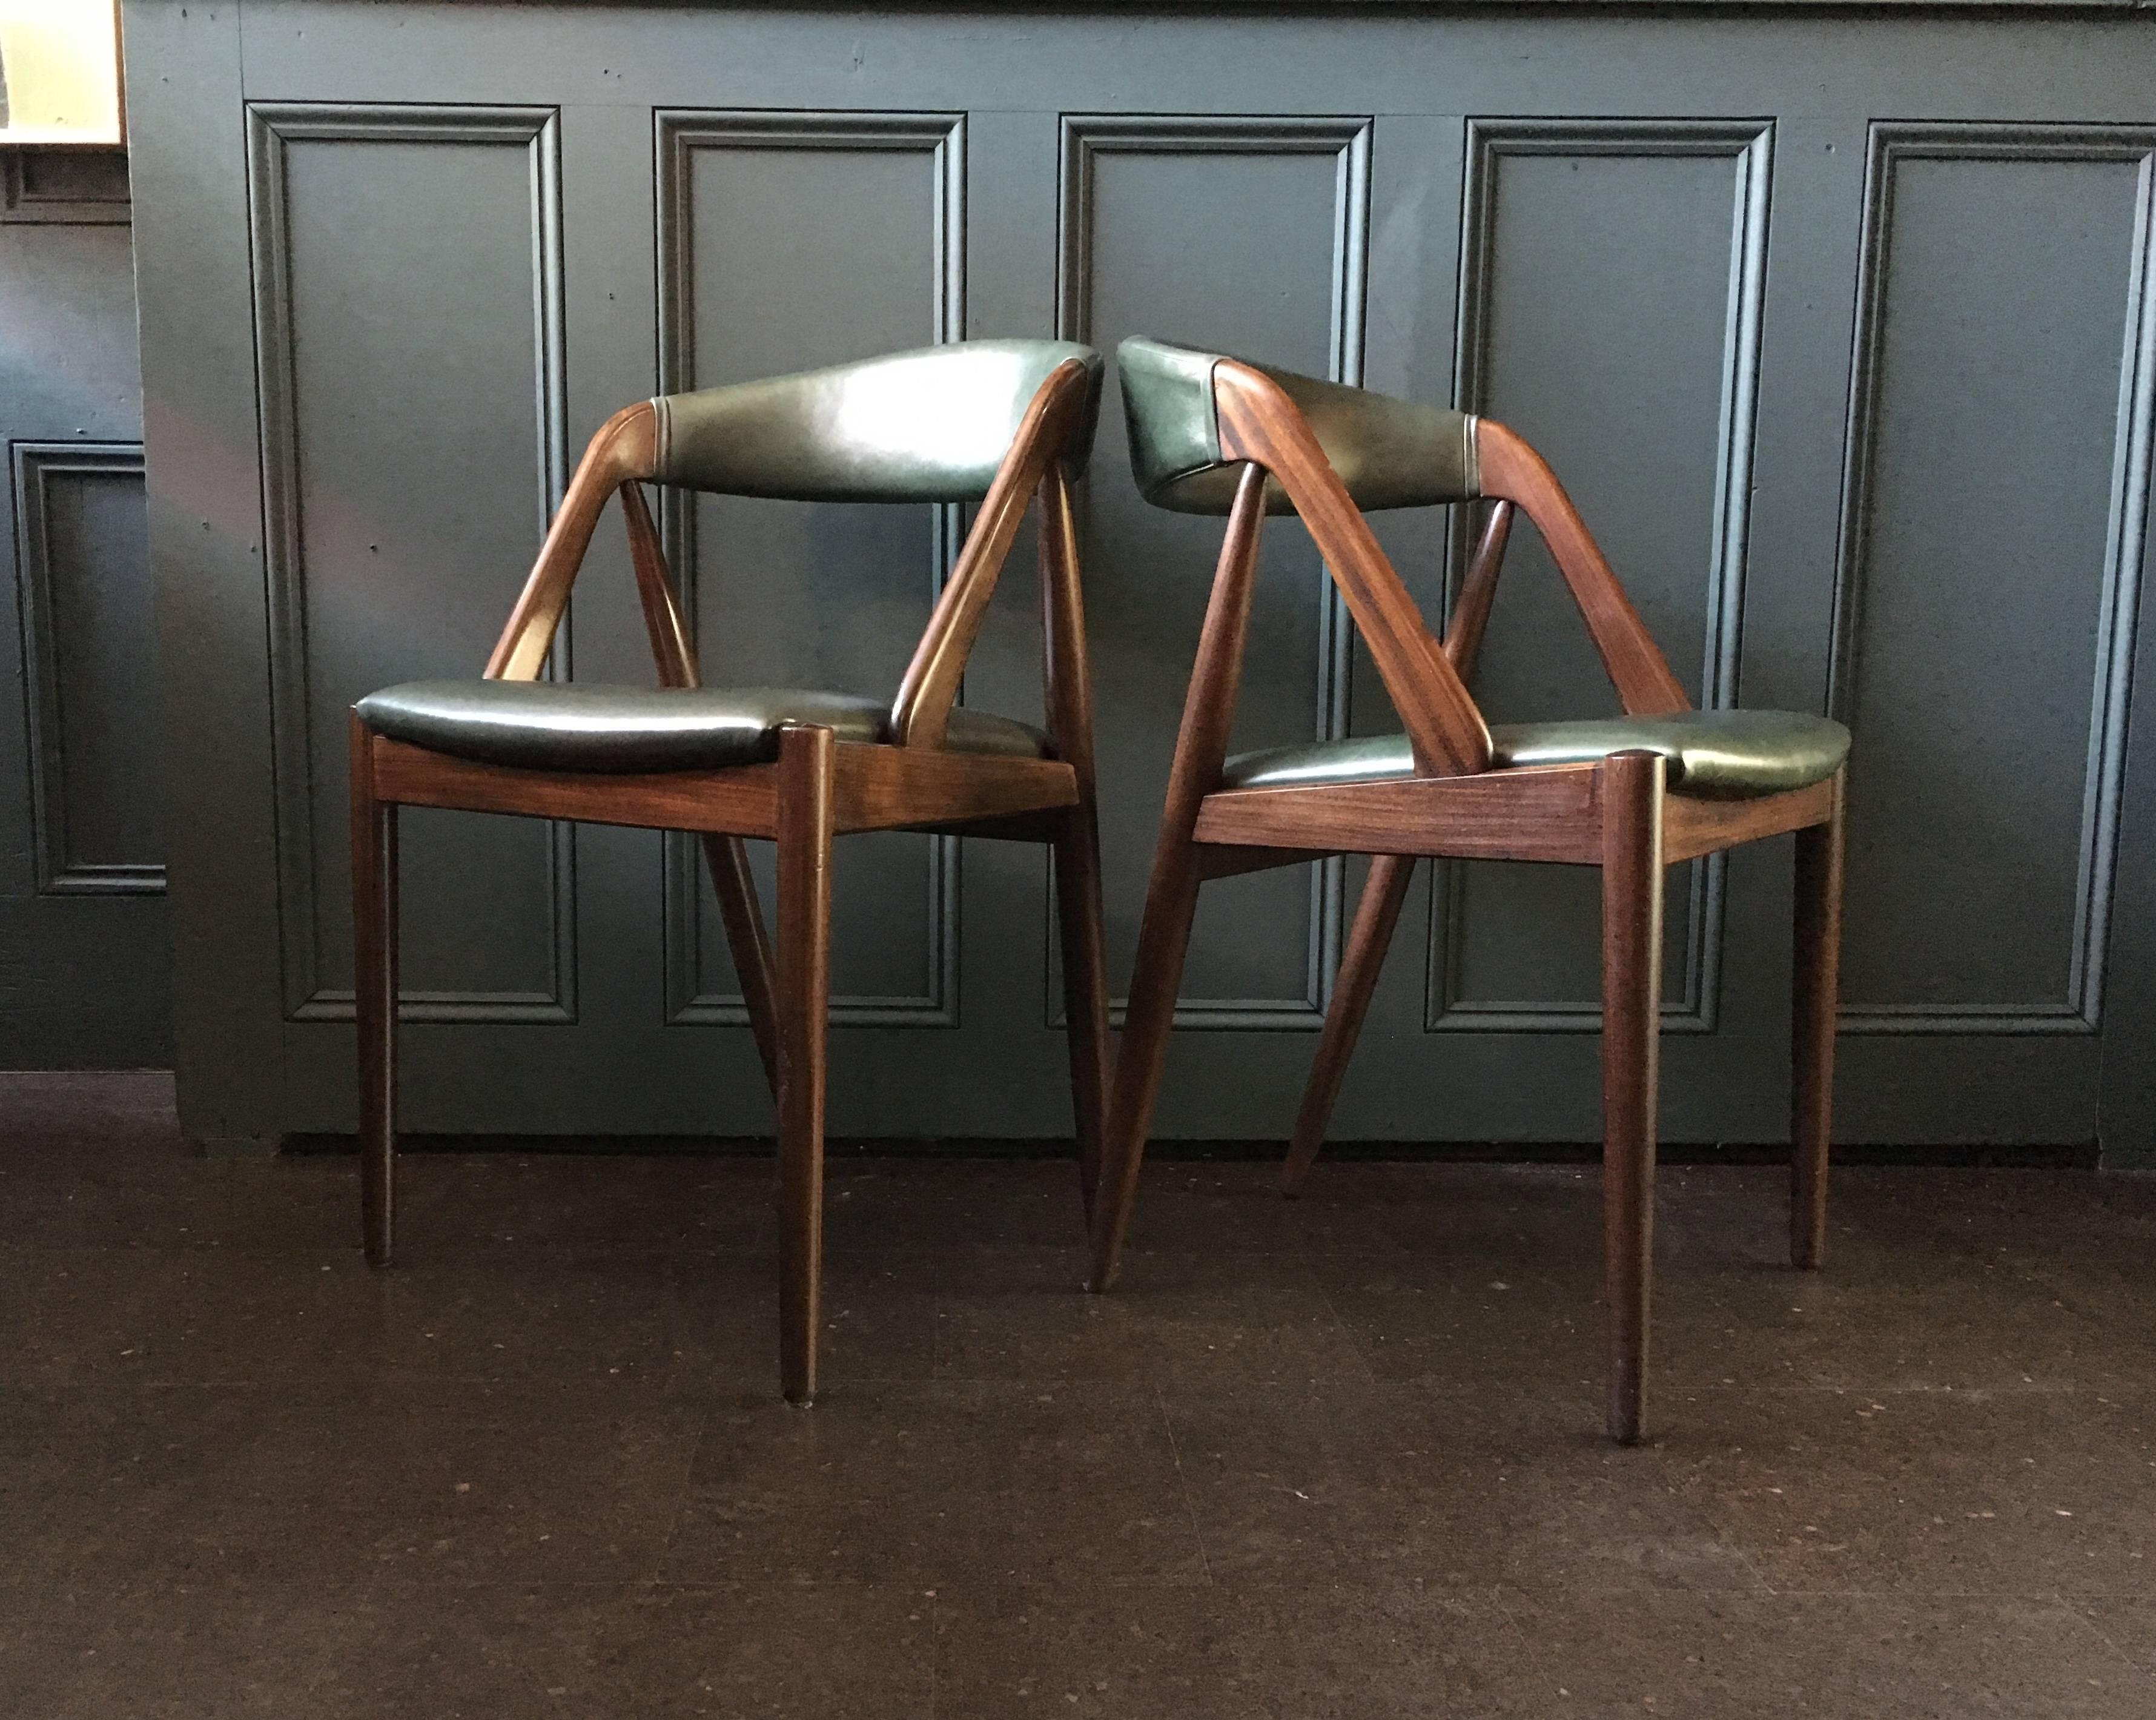 Kai Kristiansen Dining Chairs, model 31, restored set of 4. 1